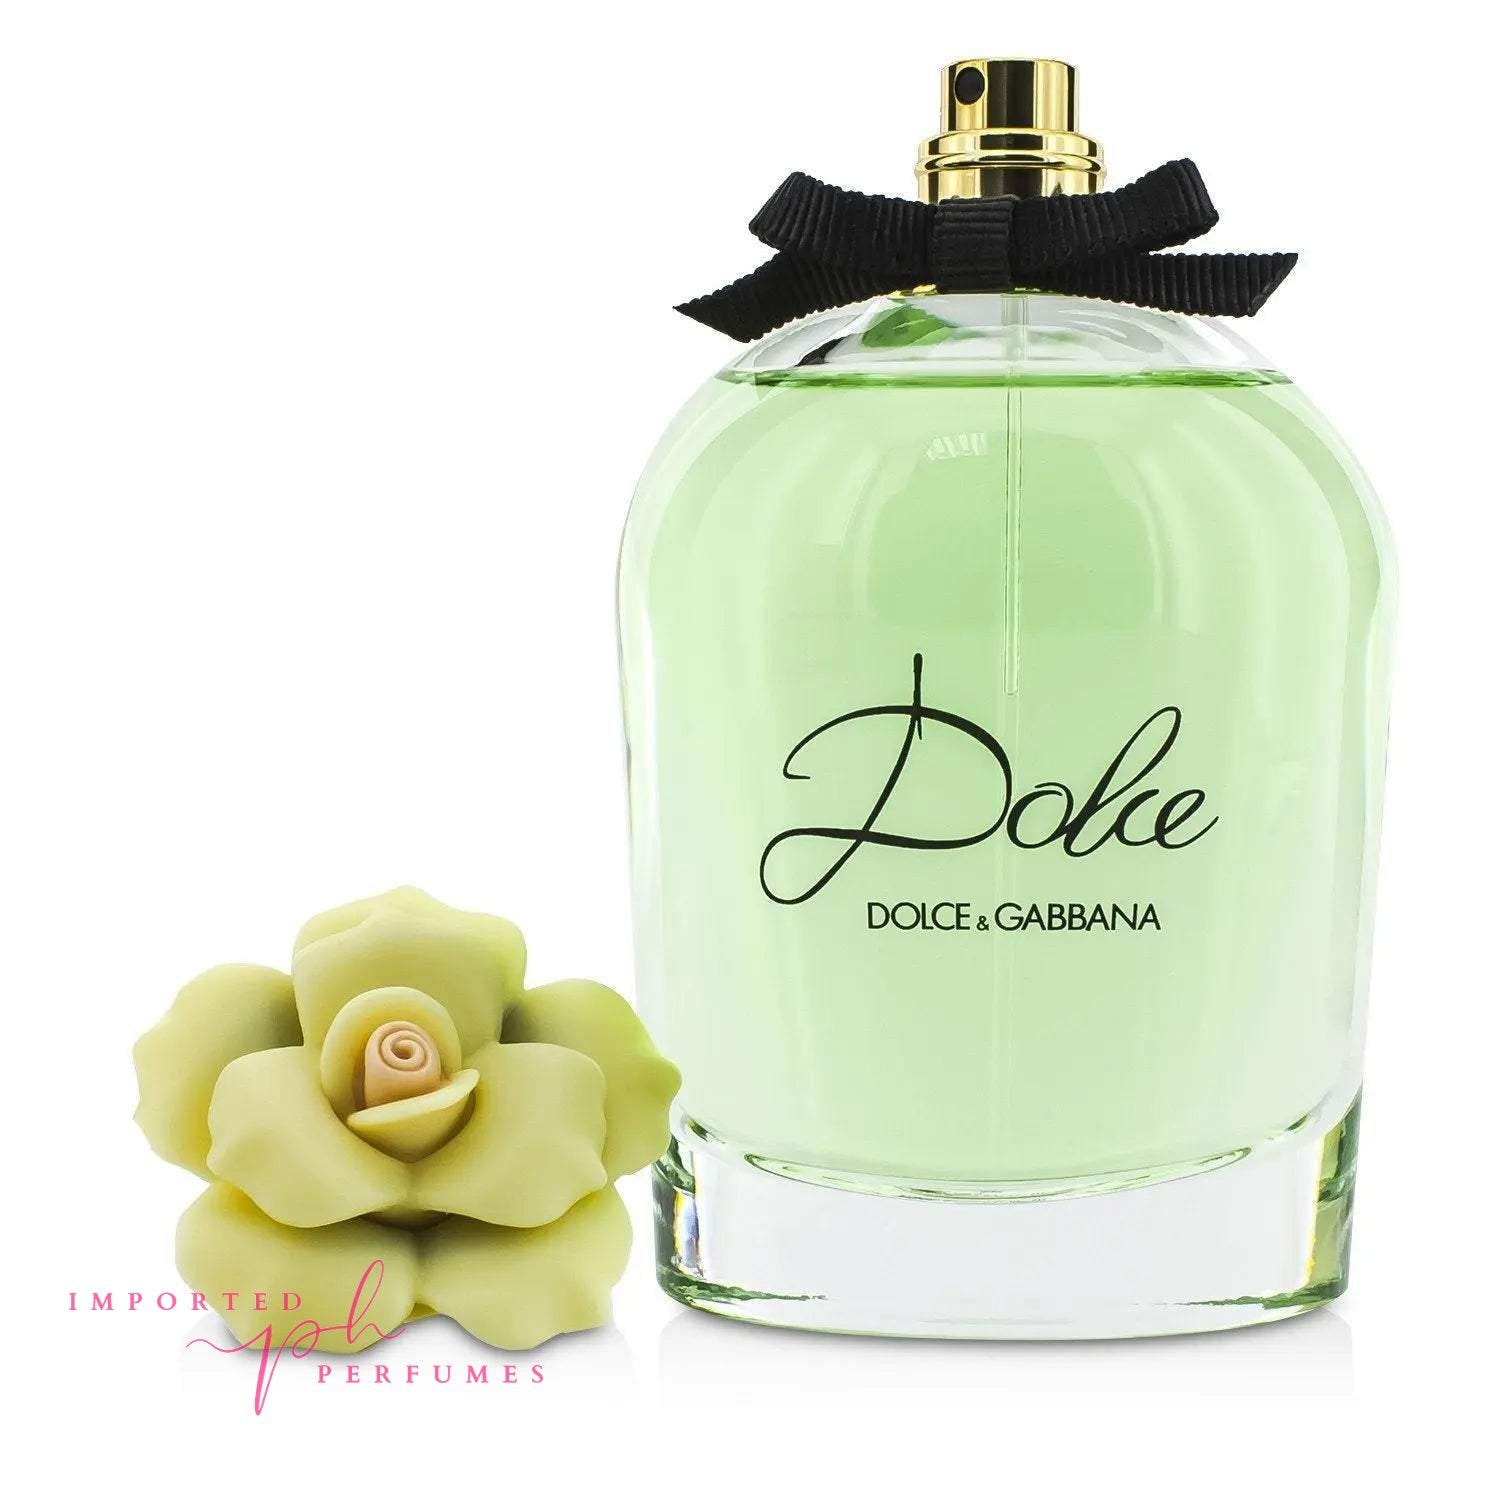 Dolce by Dolce & Gabbana Eau de Parfum For Women 250ml-Imported Perfumes Co-Dolce,Dolce & Gabbana,Dolce by dolce,for women,women